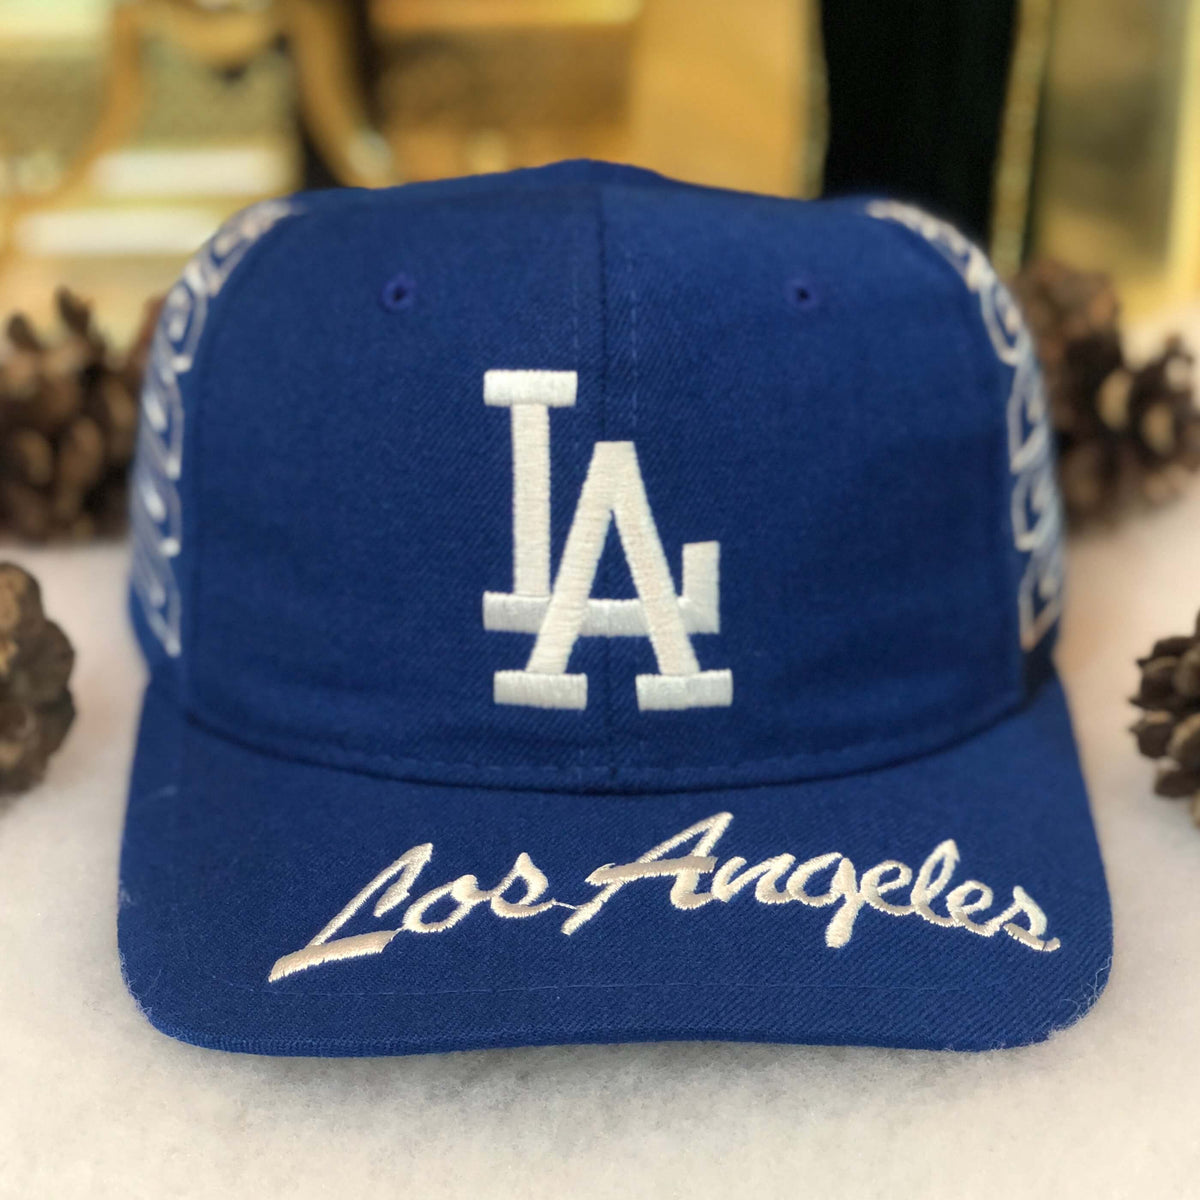 Vintage Grandpa Hat - Los Angeles Dodgers Snapback - Amazing Condition!